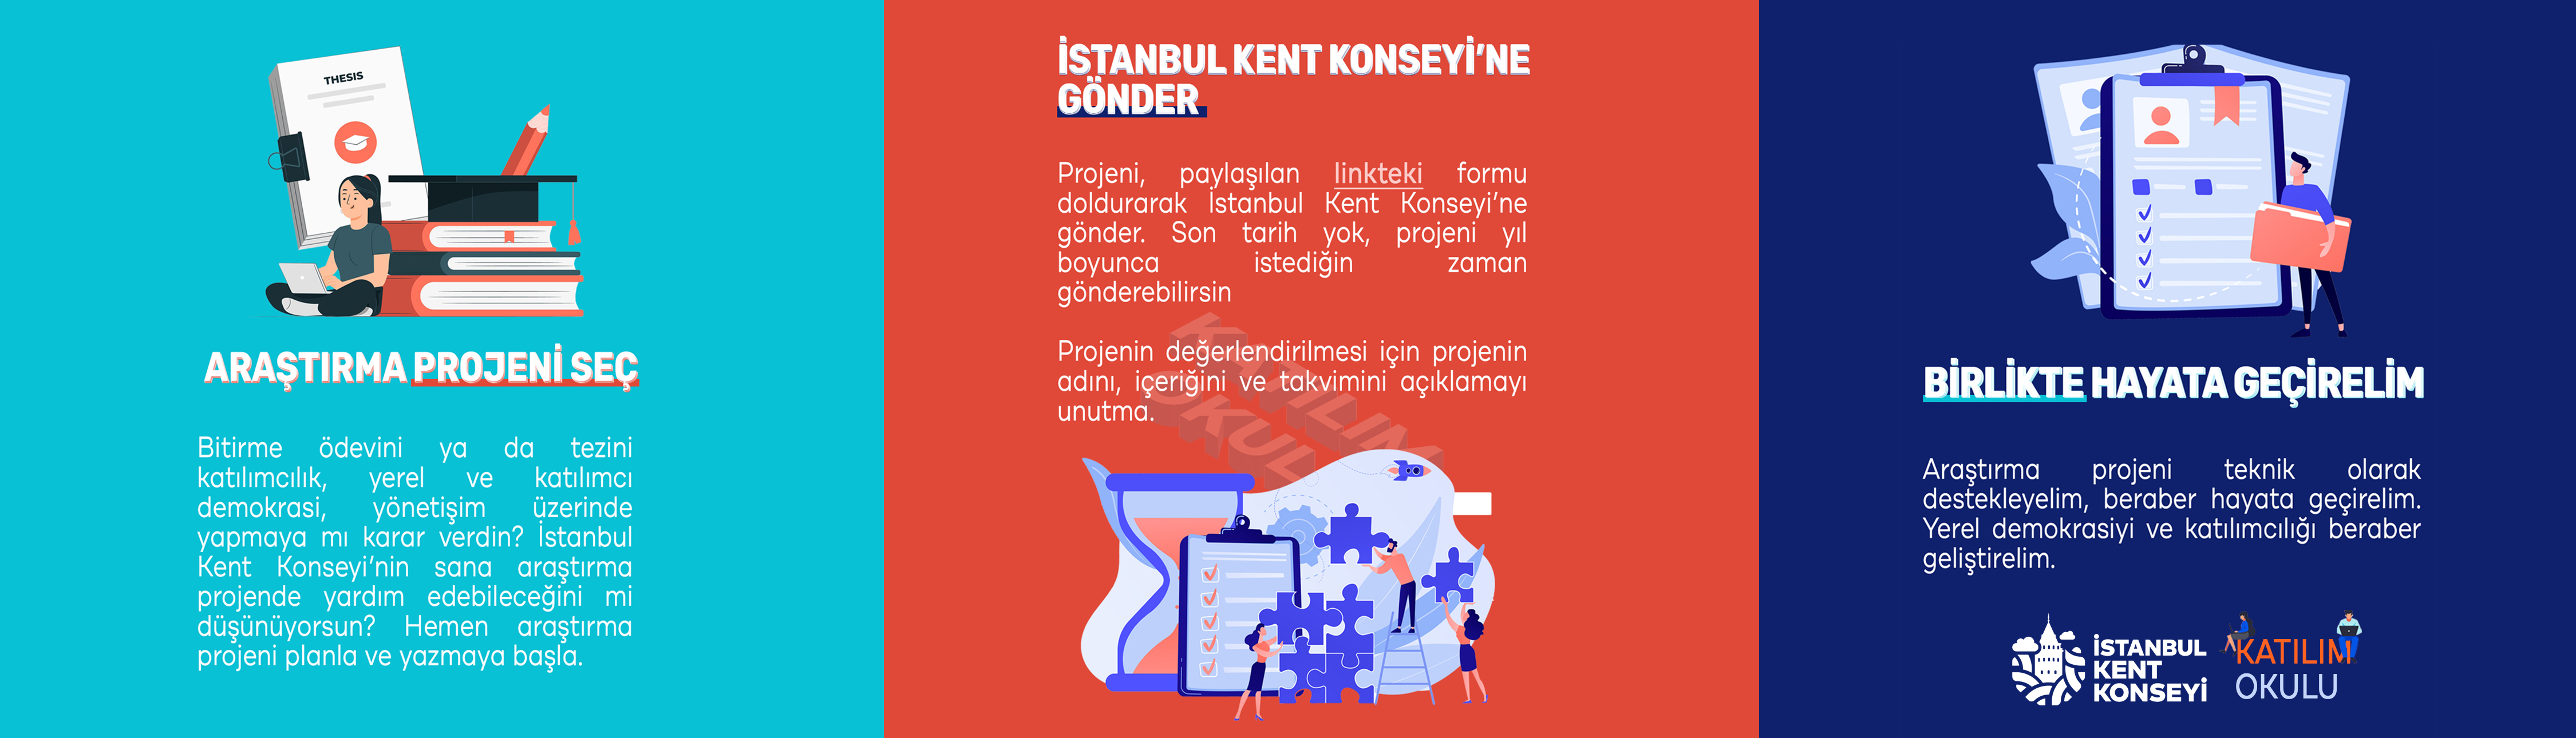 istanbul kent konseyi istanbul buyuksehir belediyesi istanbul kent konseyi